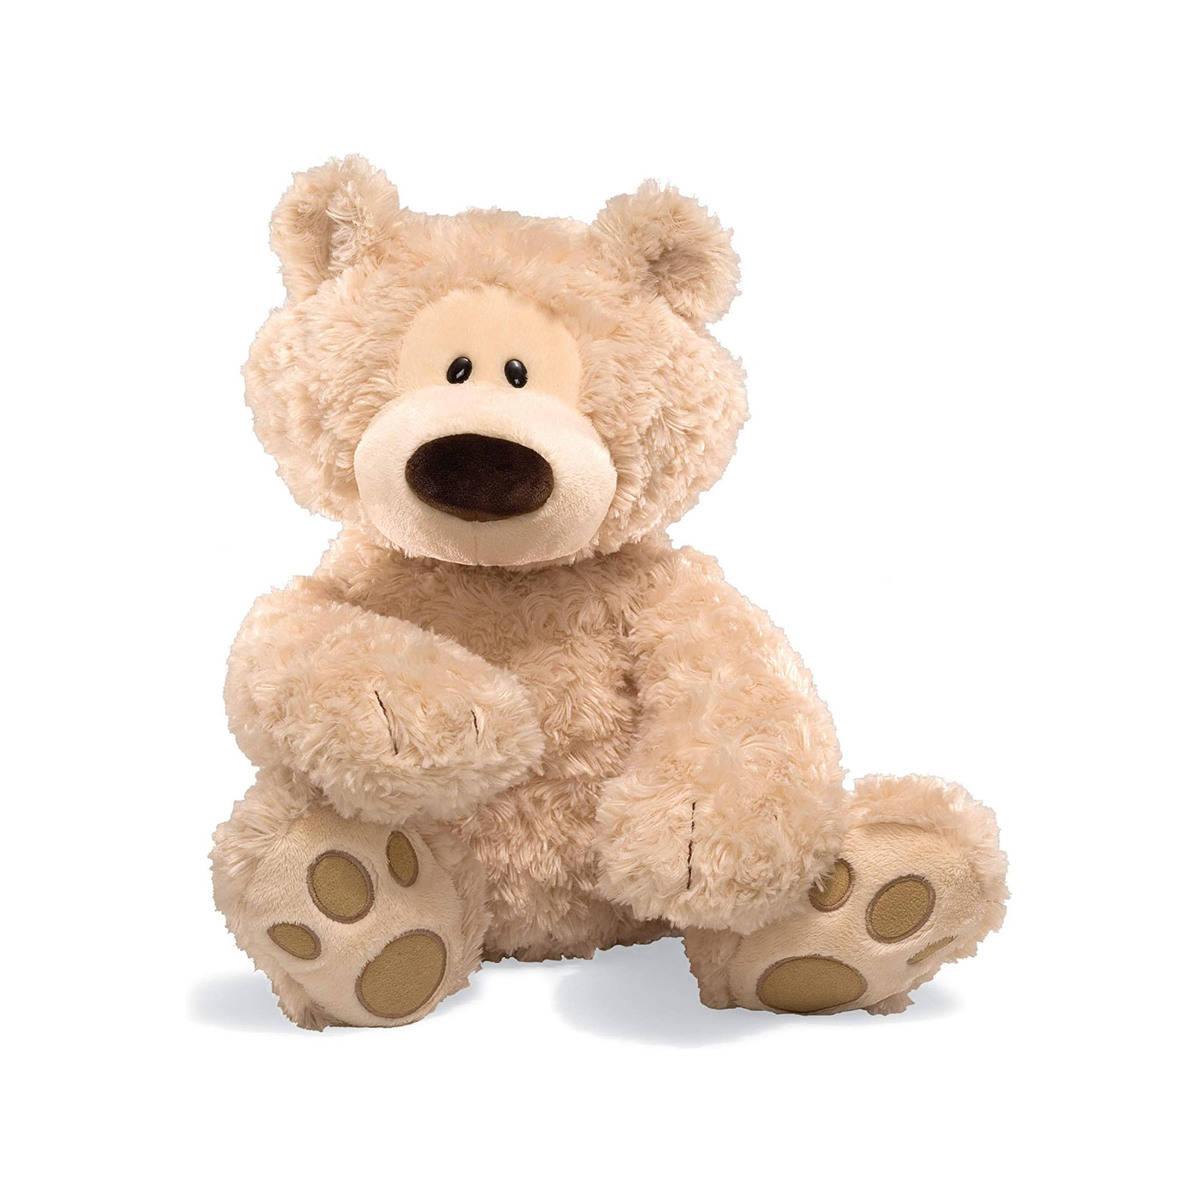 Gund Philbin Bear Plush Toy - Beige | Early Learning Centre